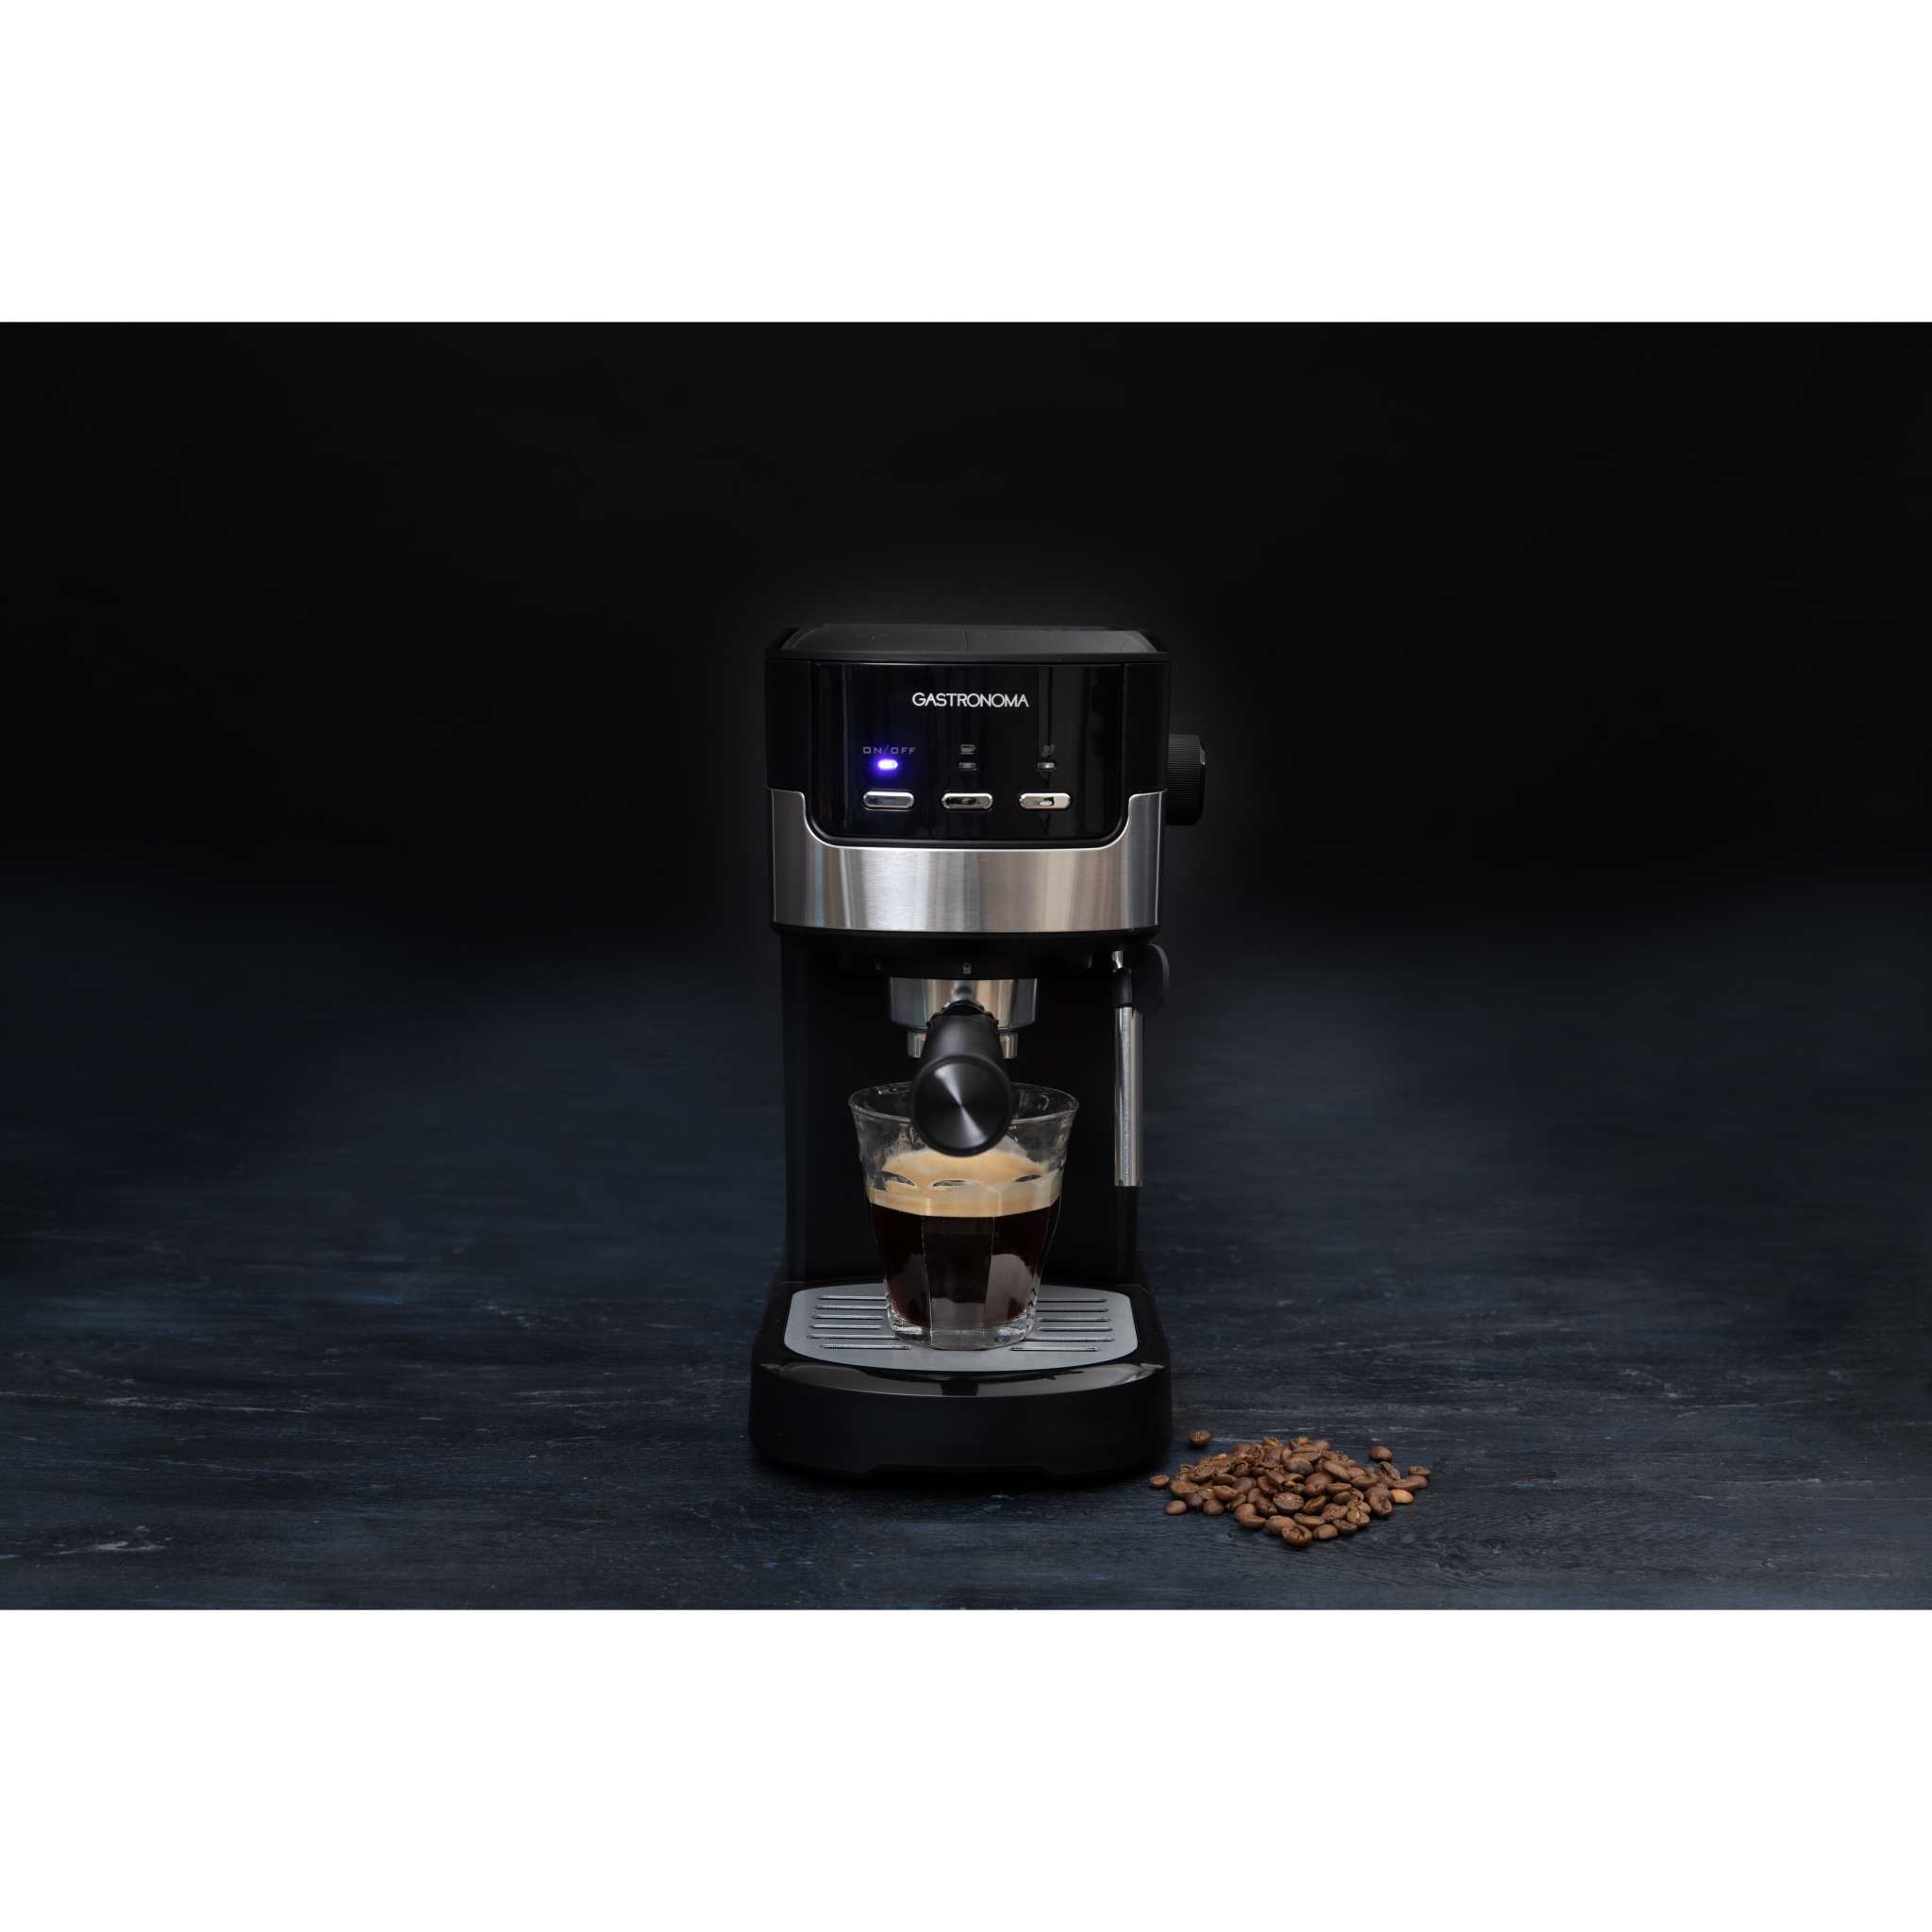 Gastronoma Espresso maskine, 15 bar, 1100W, sort/stål